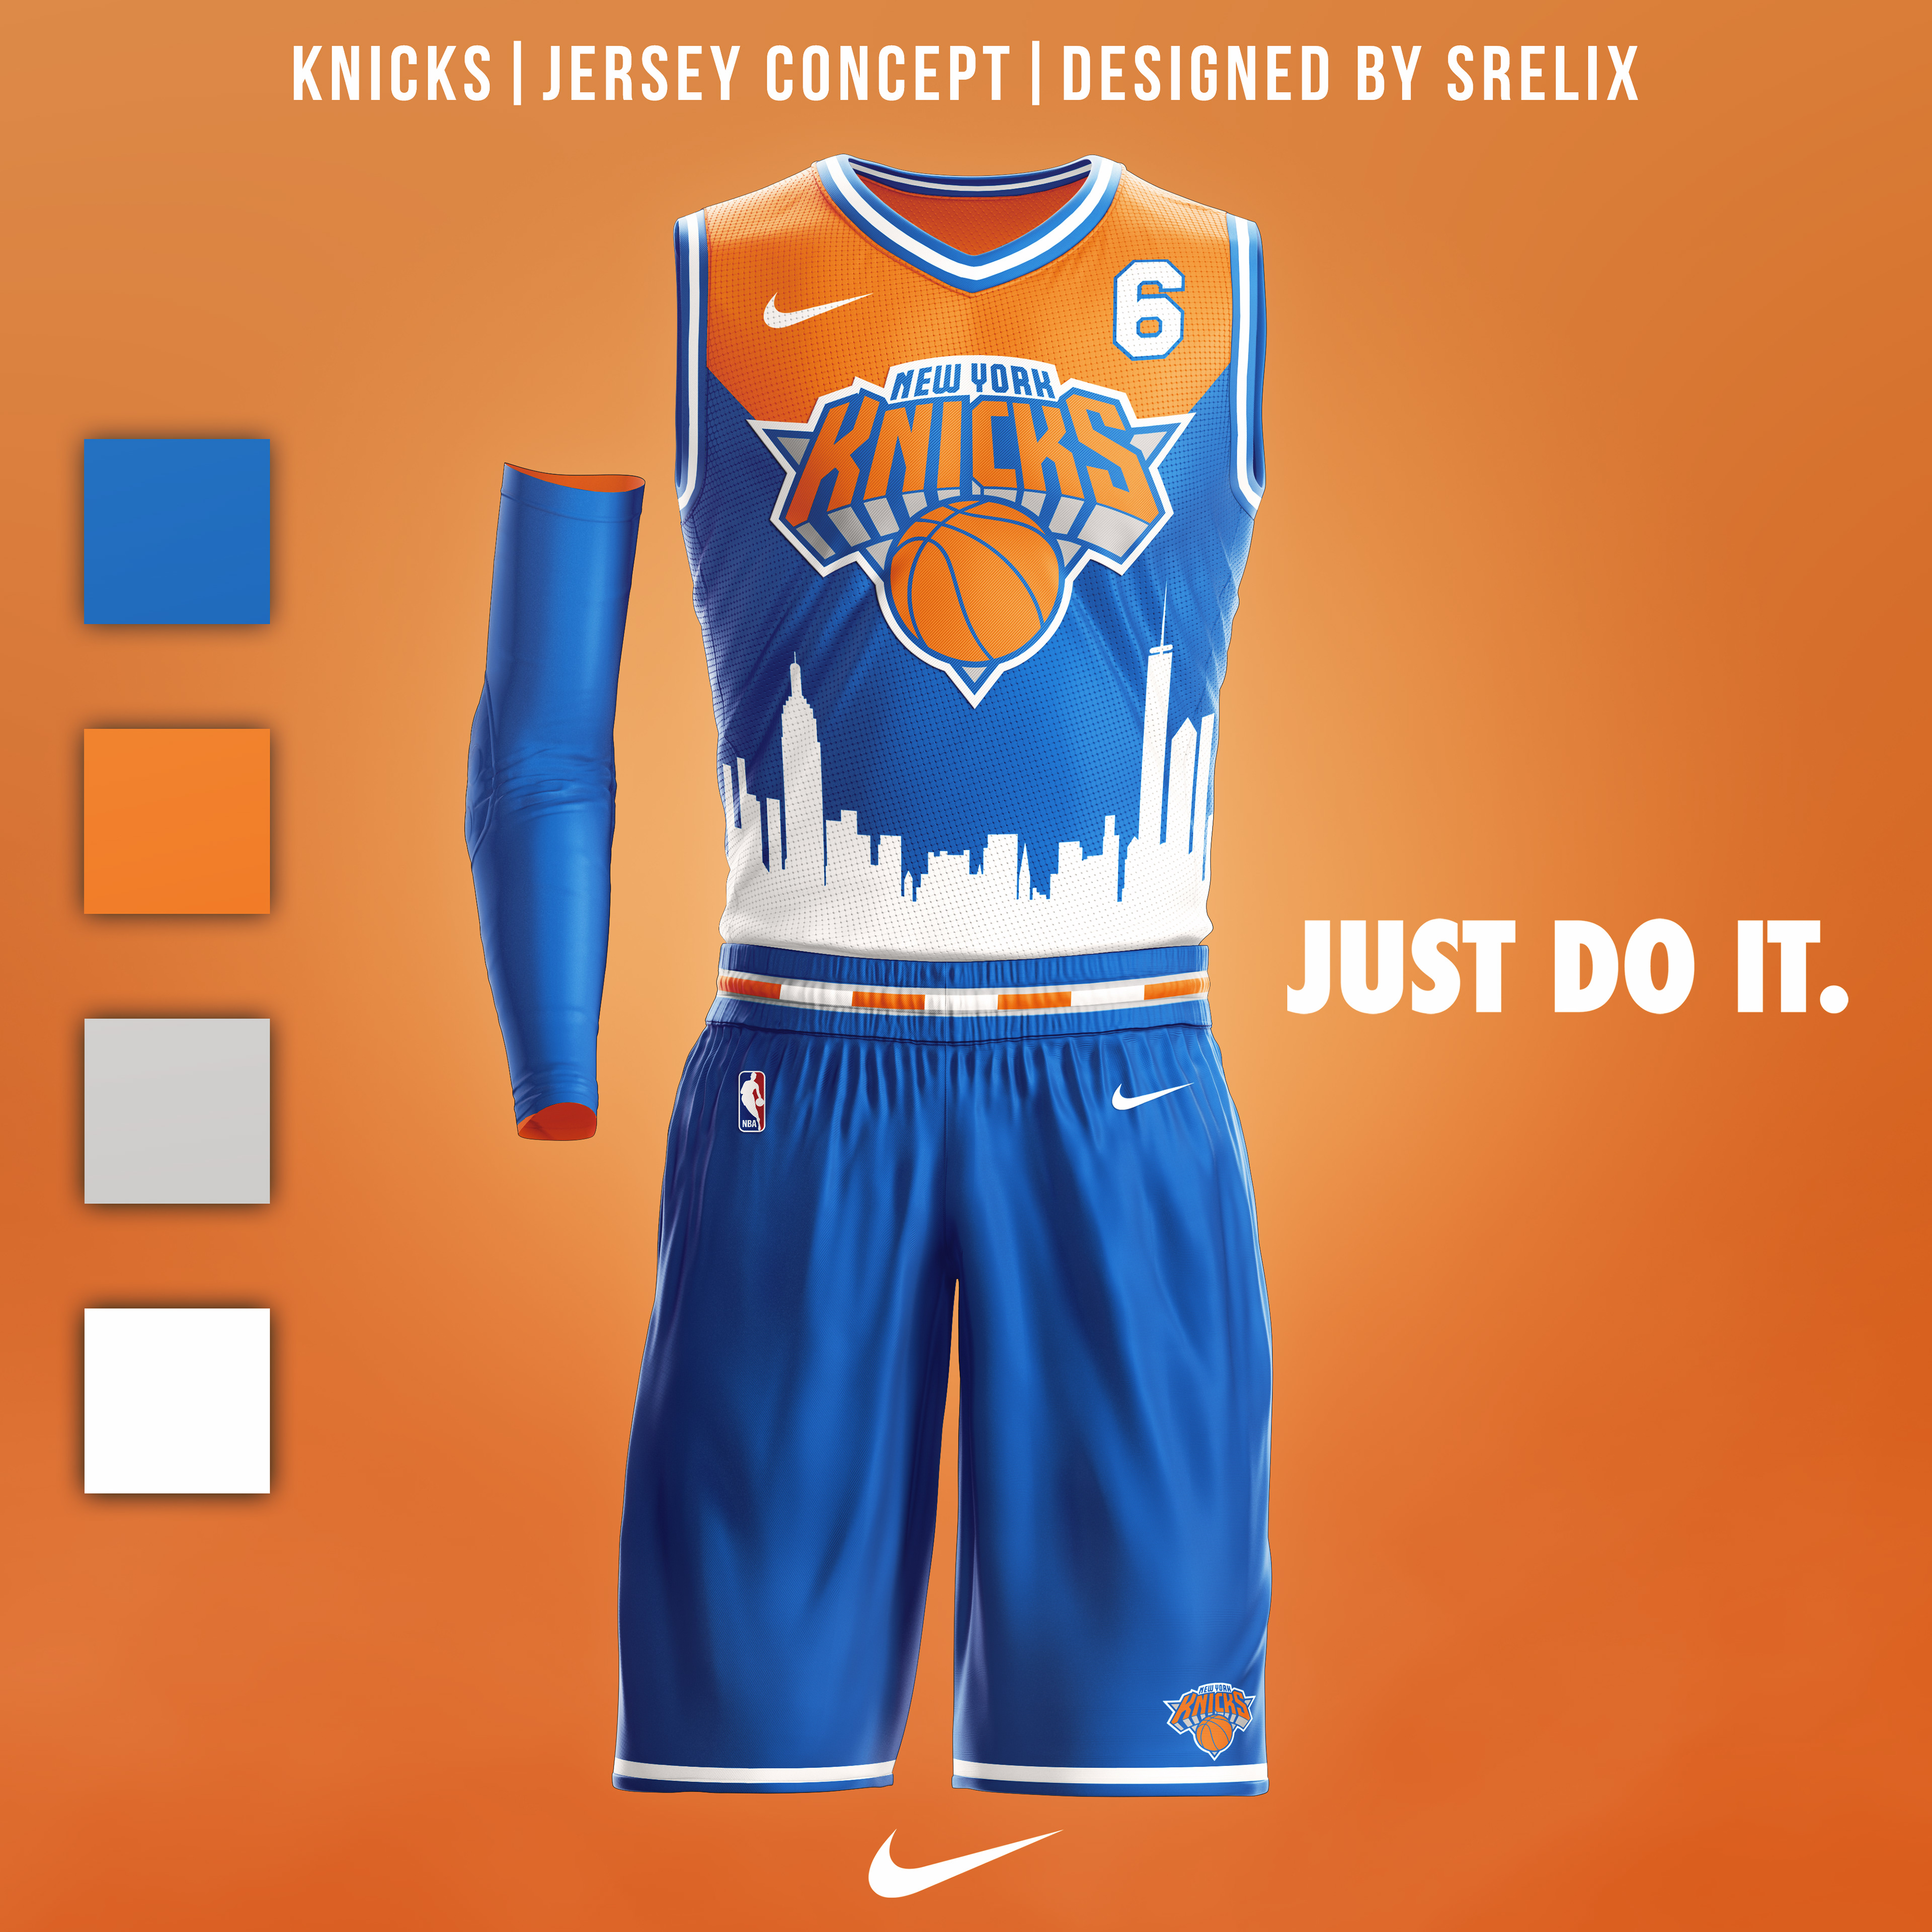 knicks jersey concept